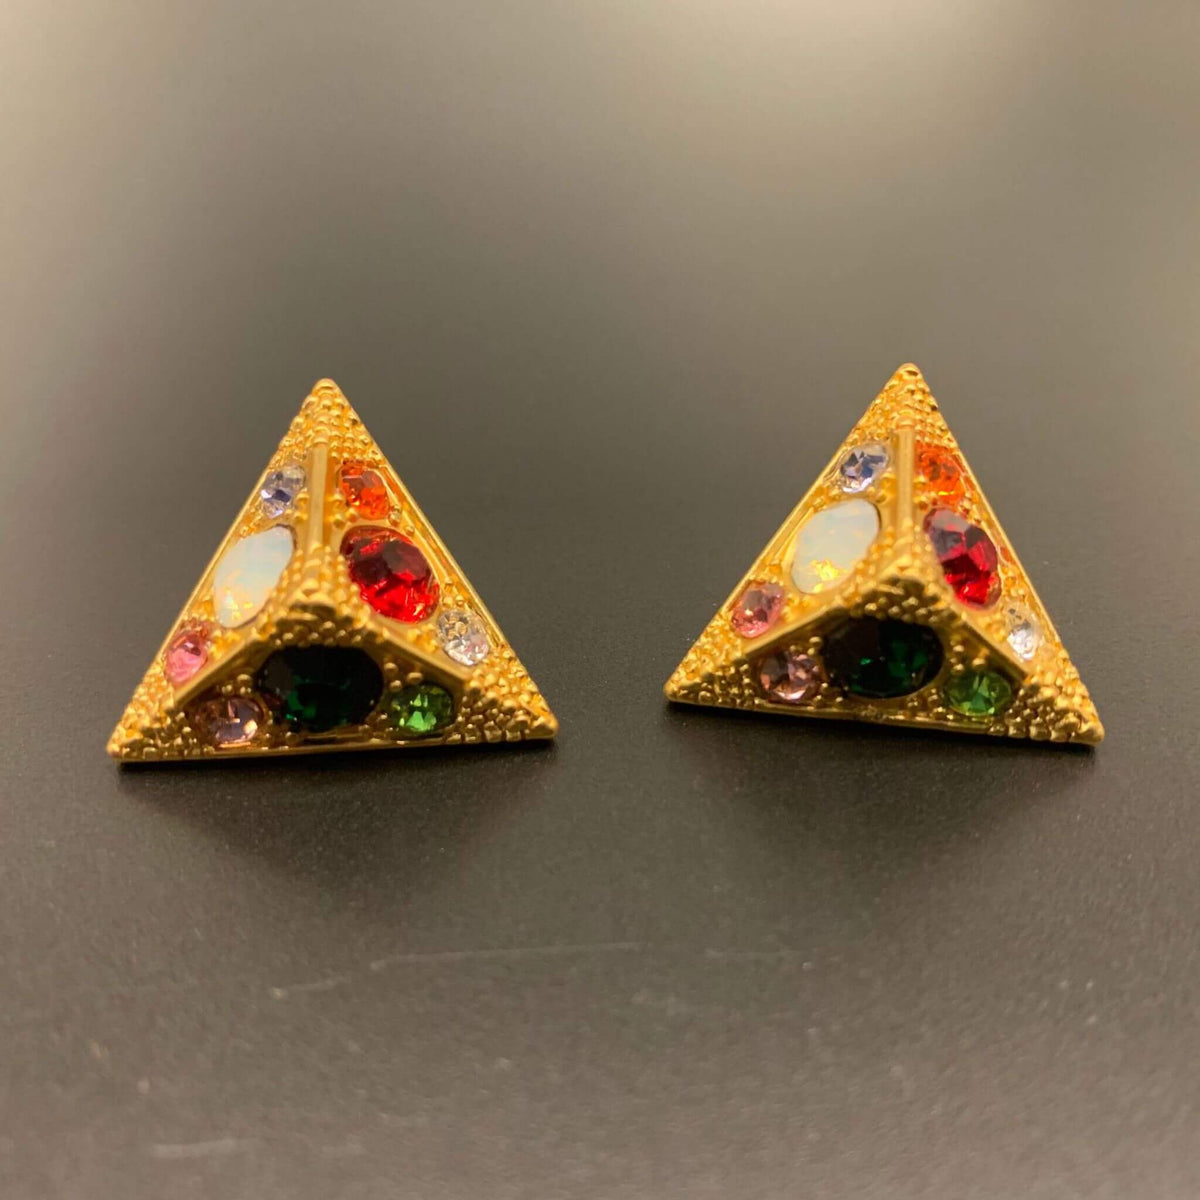 Vintage Rhinestone Inlaid Triangle Earrings - Retro Geometric Elegance  UponBasics Earrings Golden 